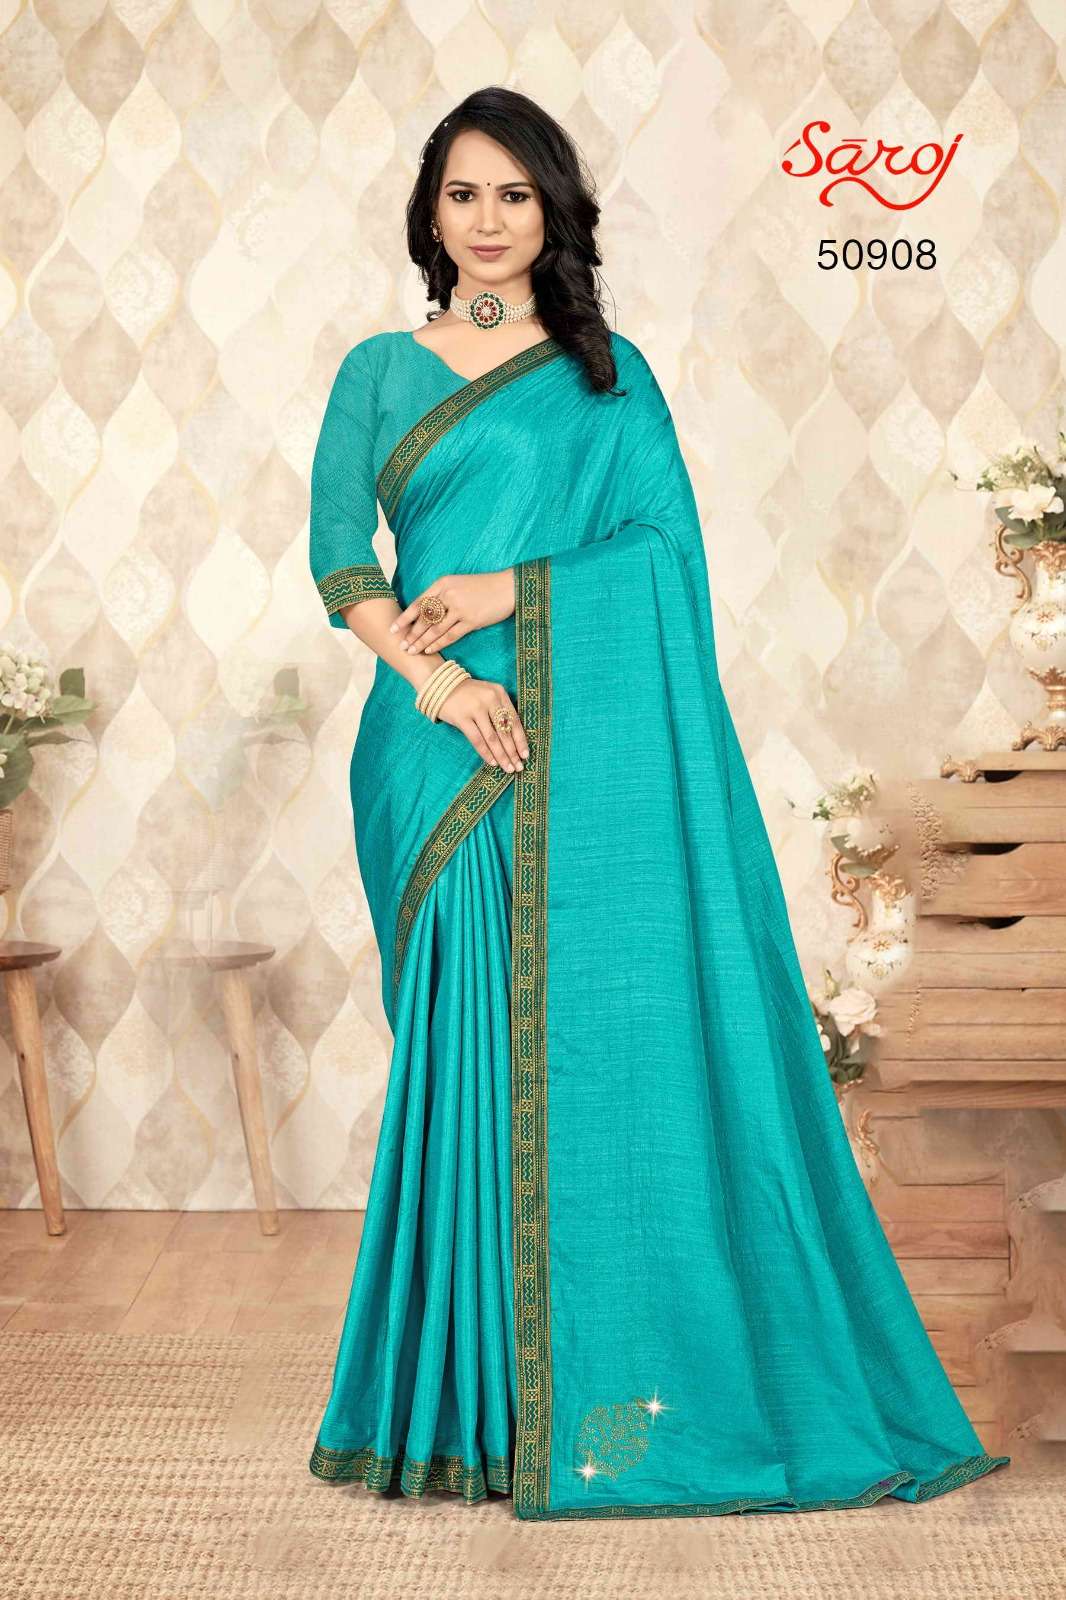 Saroj textile presents Fruit combo-6 Designer casual sarees catalogue